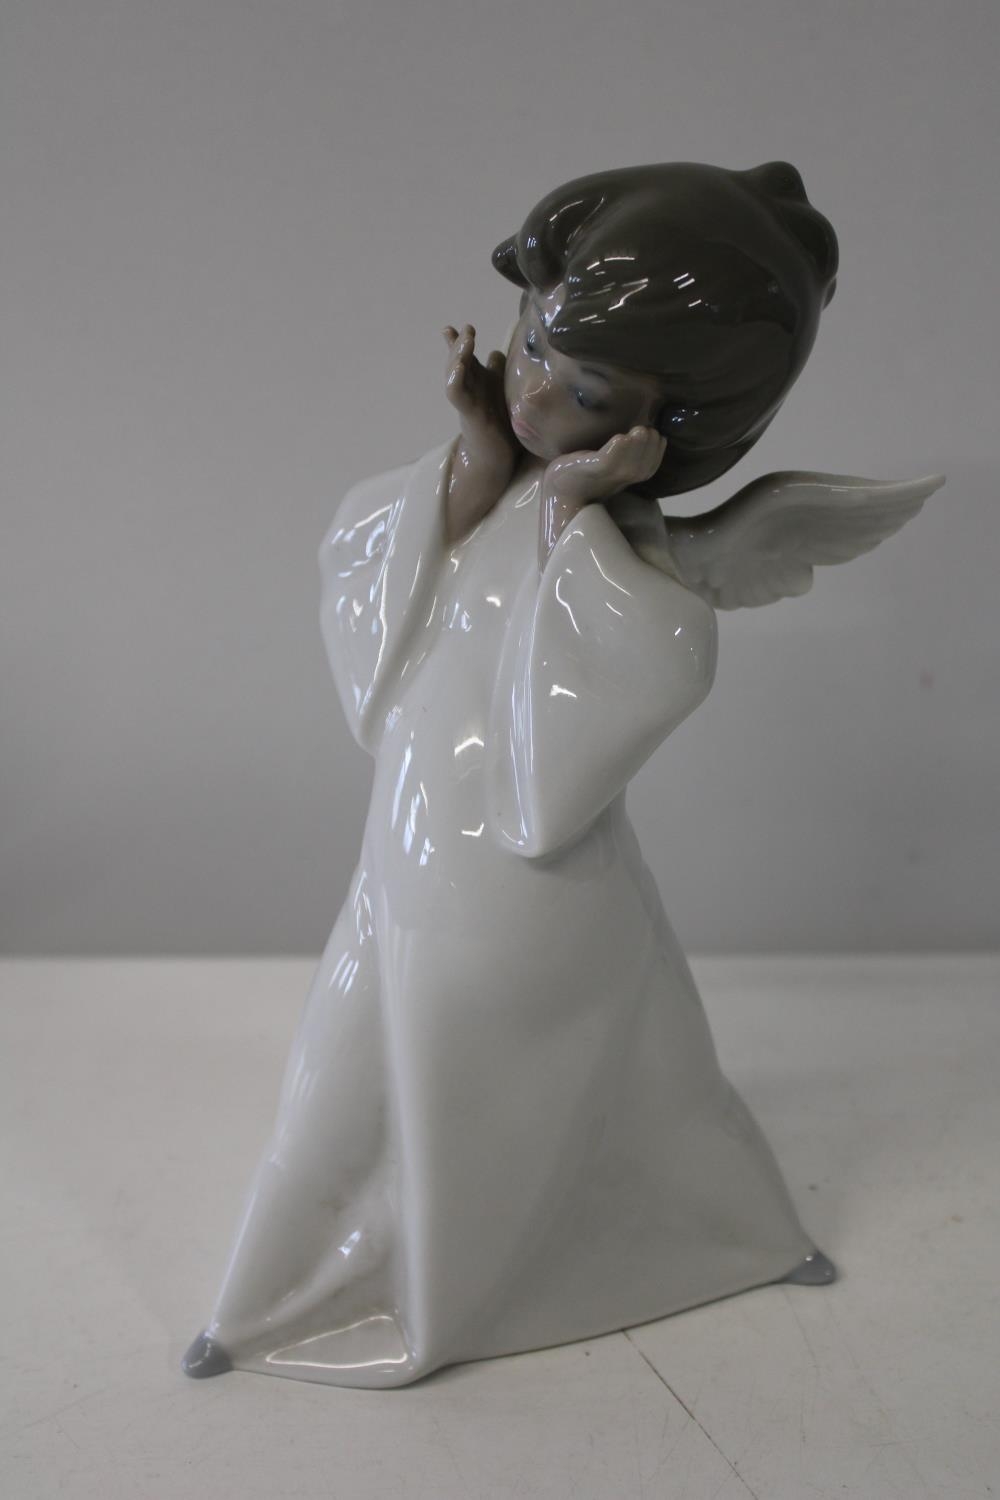 A Lladro figurine 23cm tall